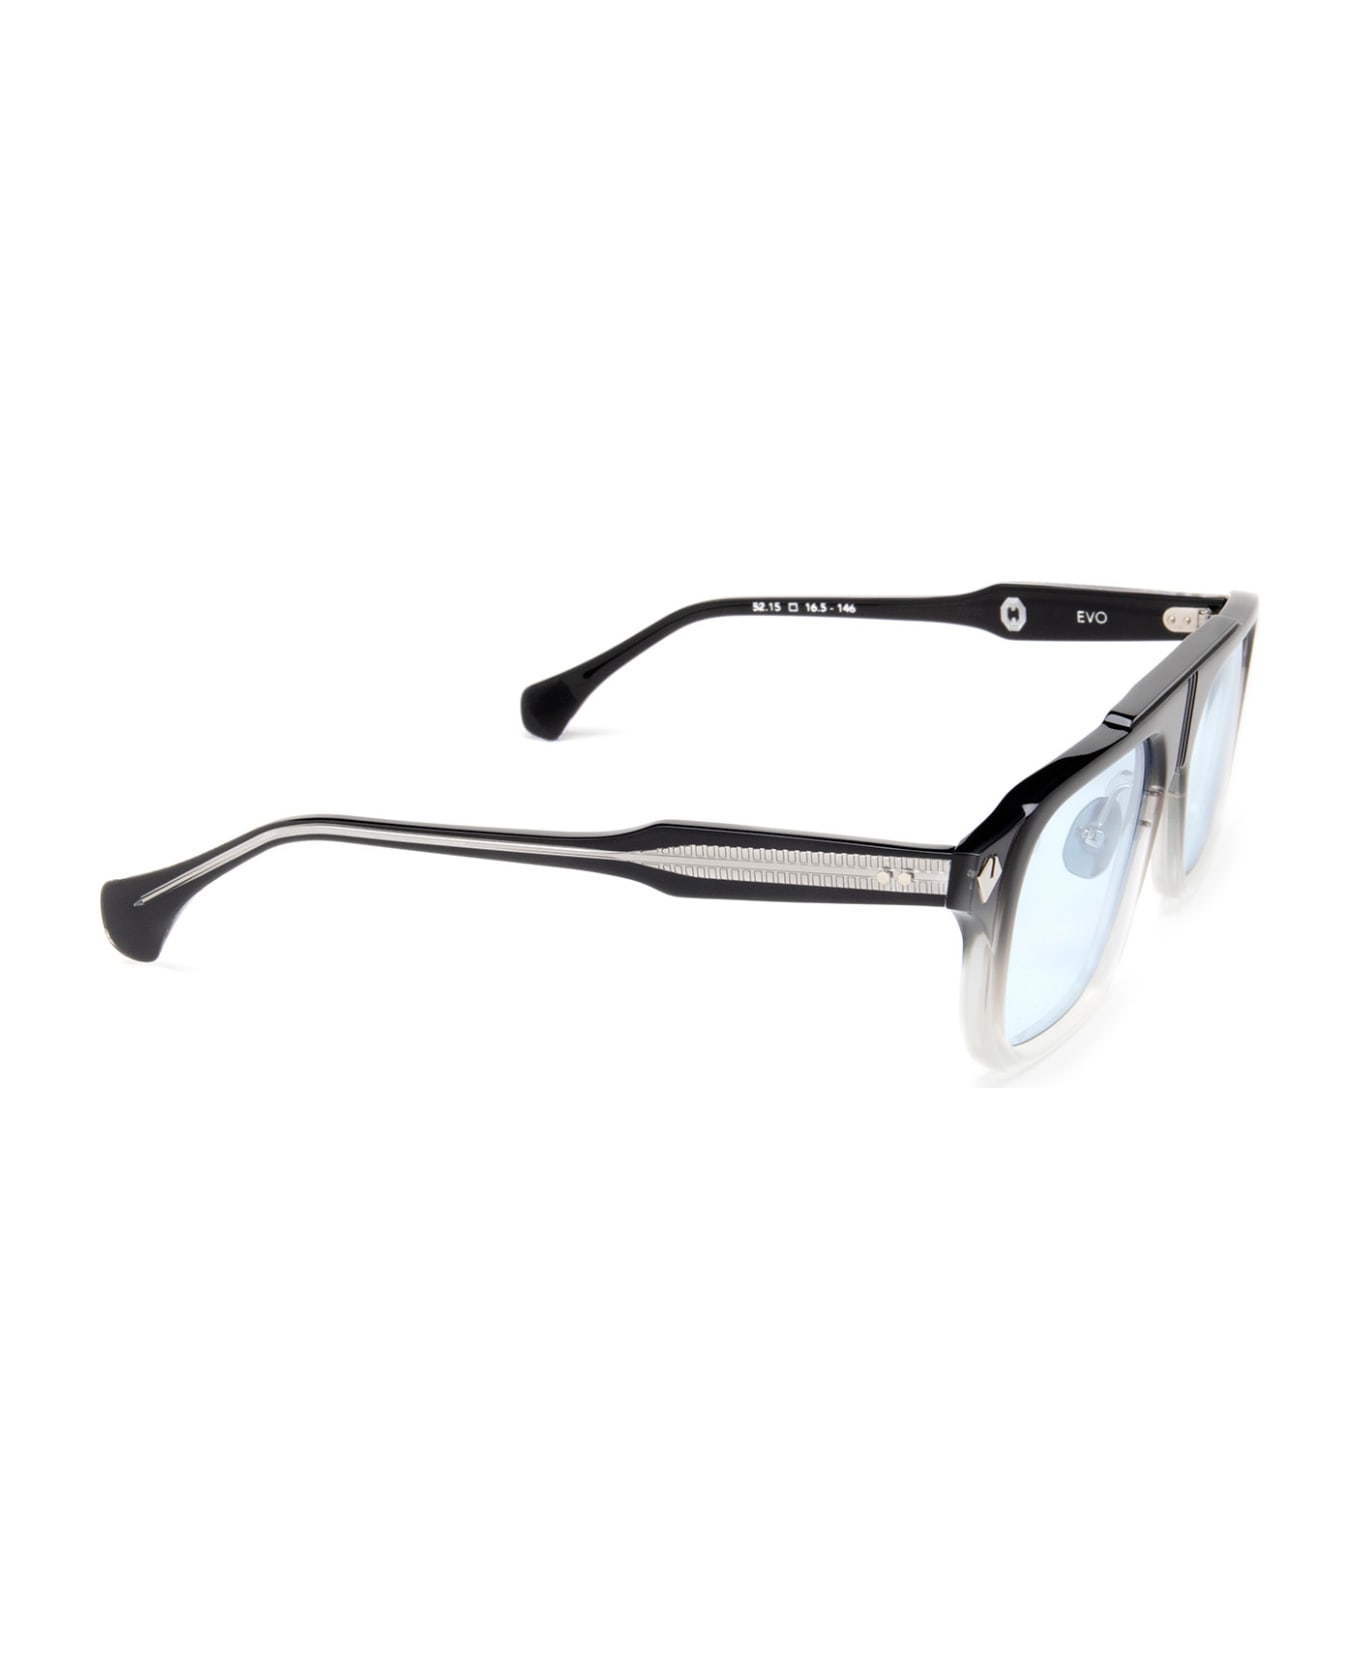 T Henri Continental Vapor Sunglasses サングラス